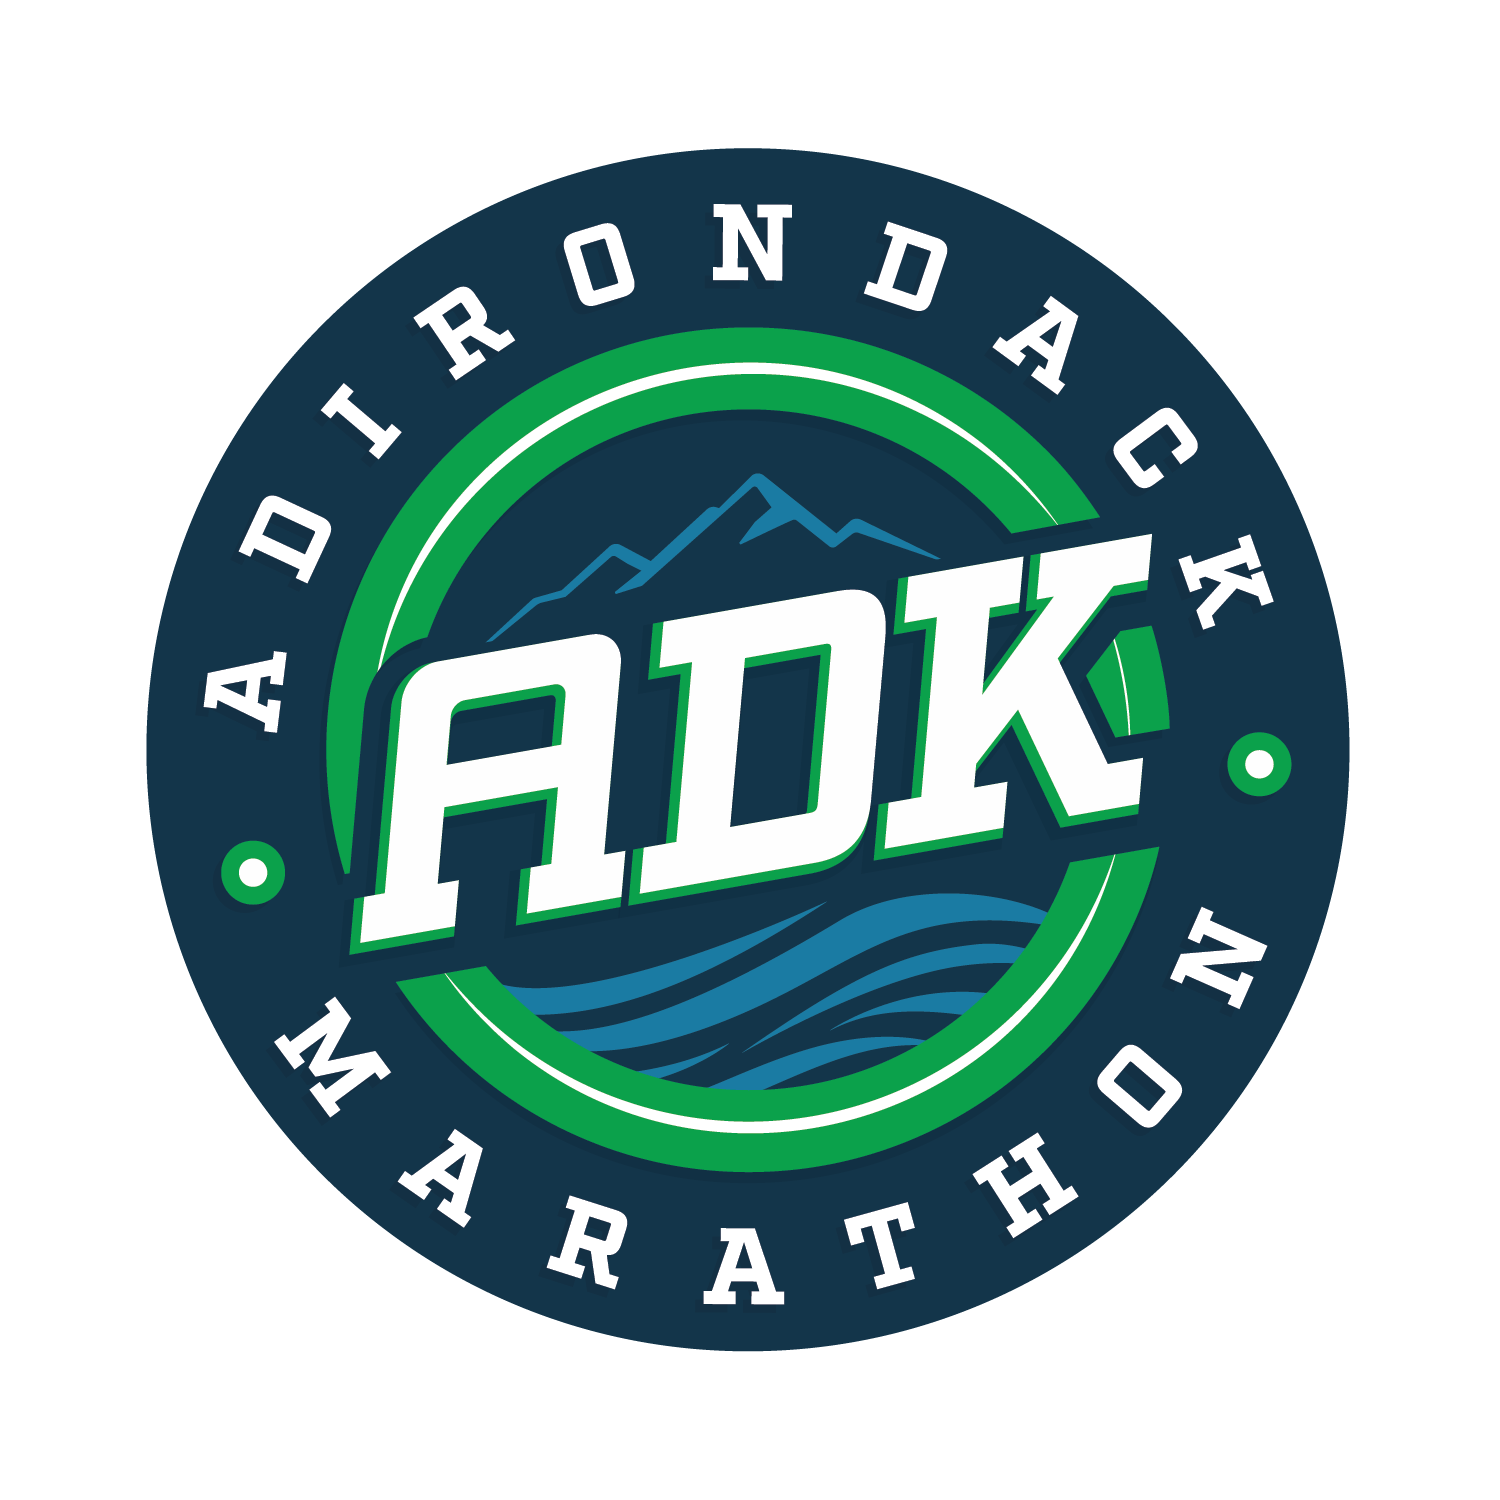 Adirondack Marathon